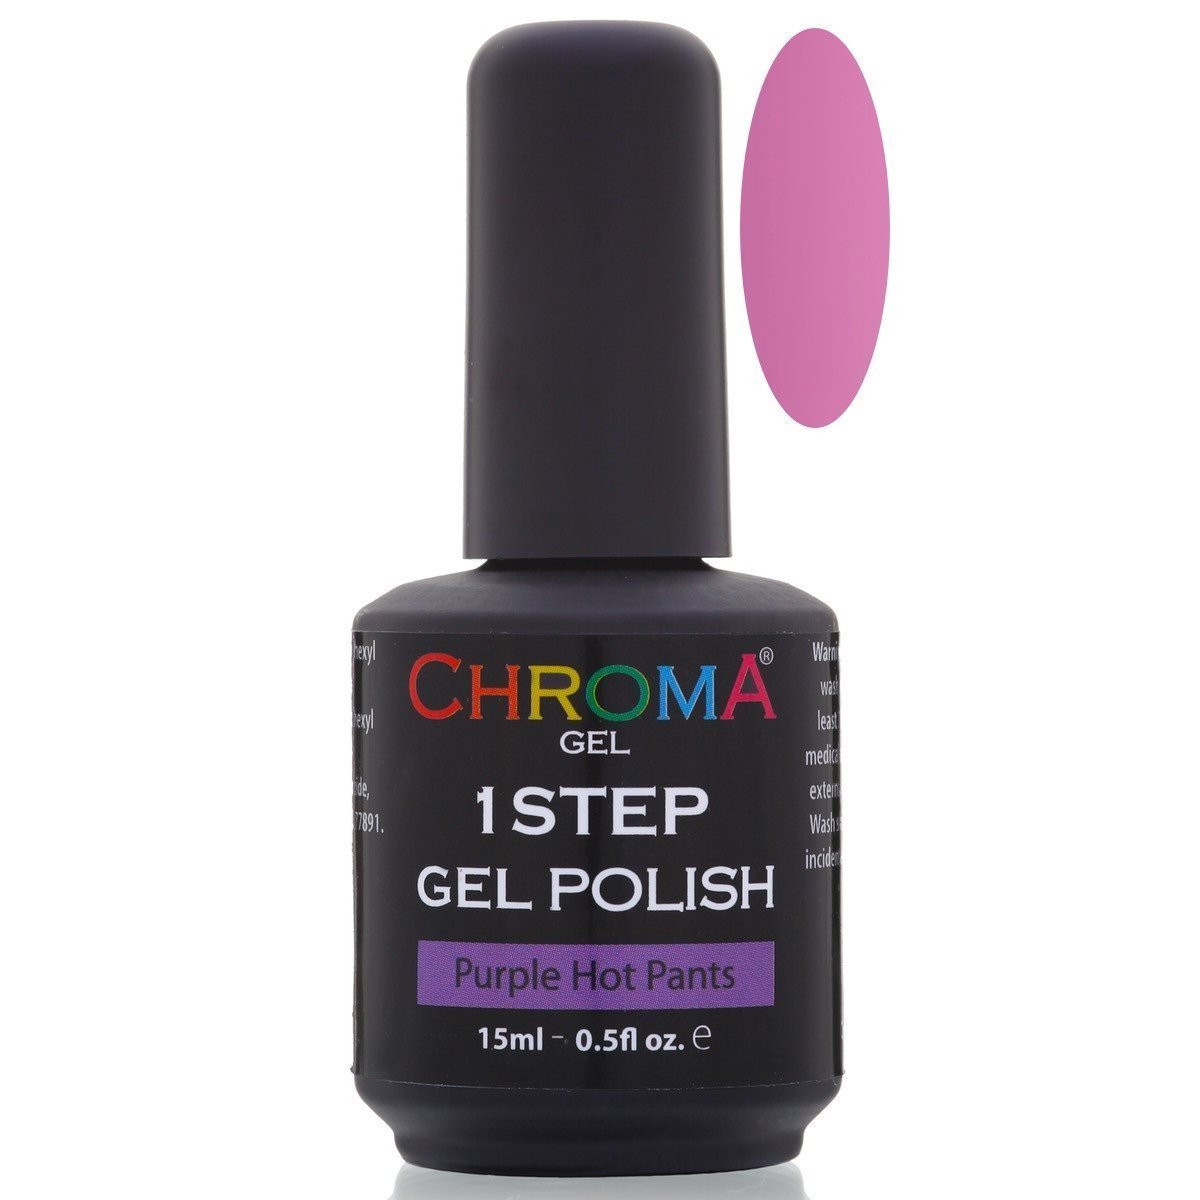 Chroma Gel 1 Step Gel Polish Purple Hot Pants No.6 - beautyhair.co.ukChroma Gel